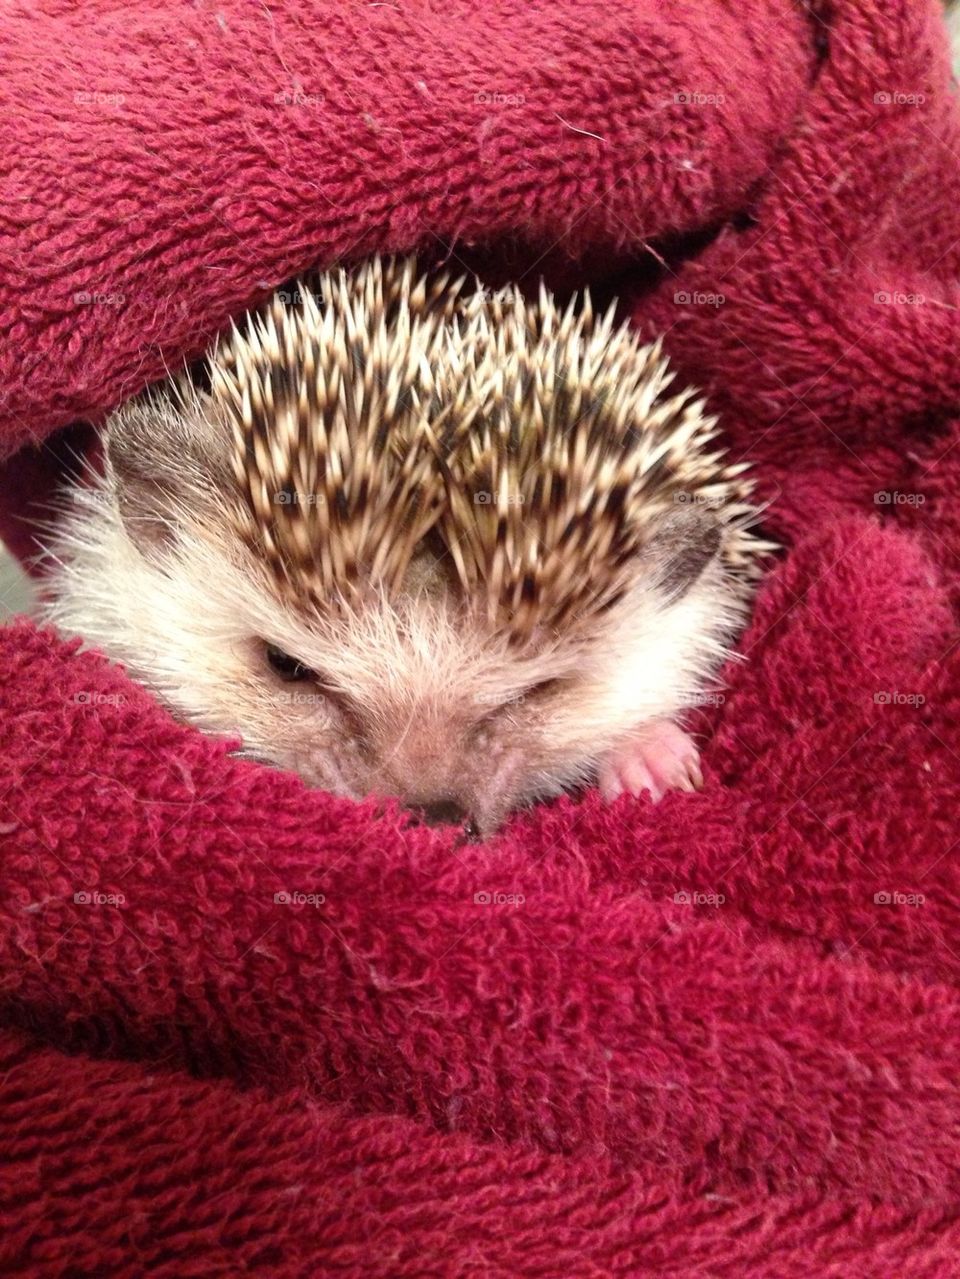 Hedgehog snuggling